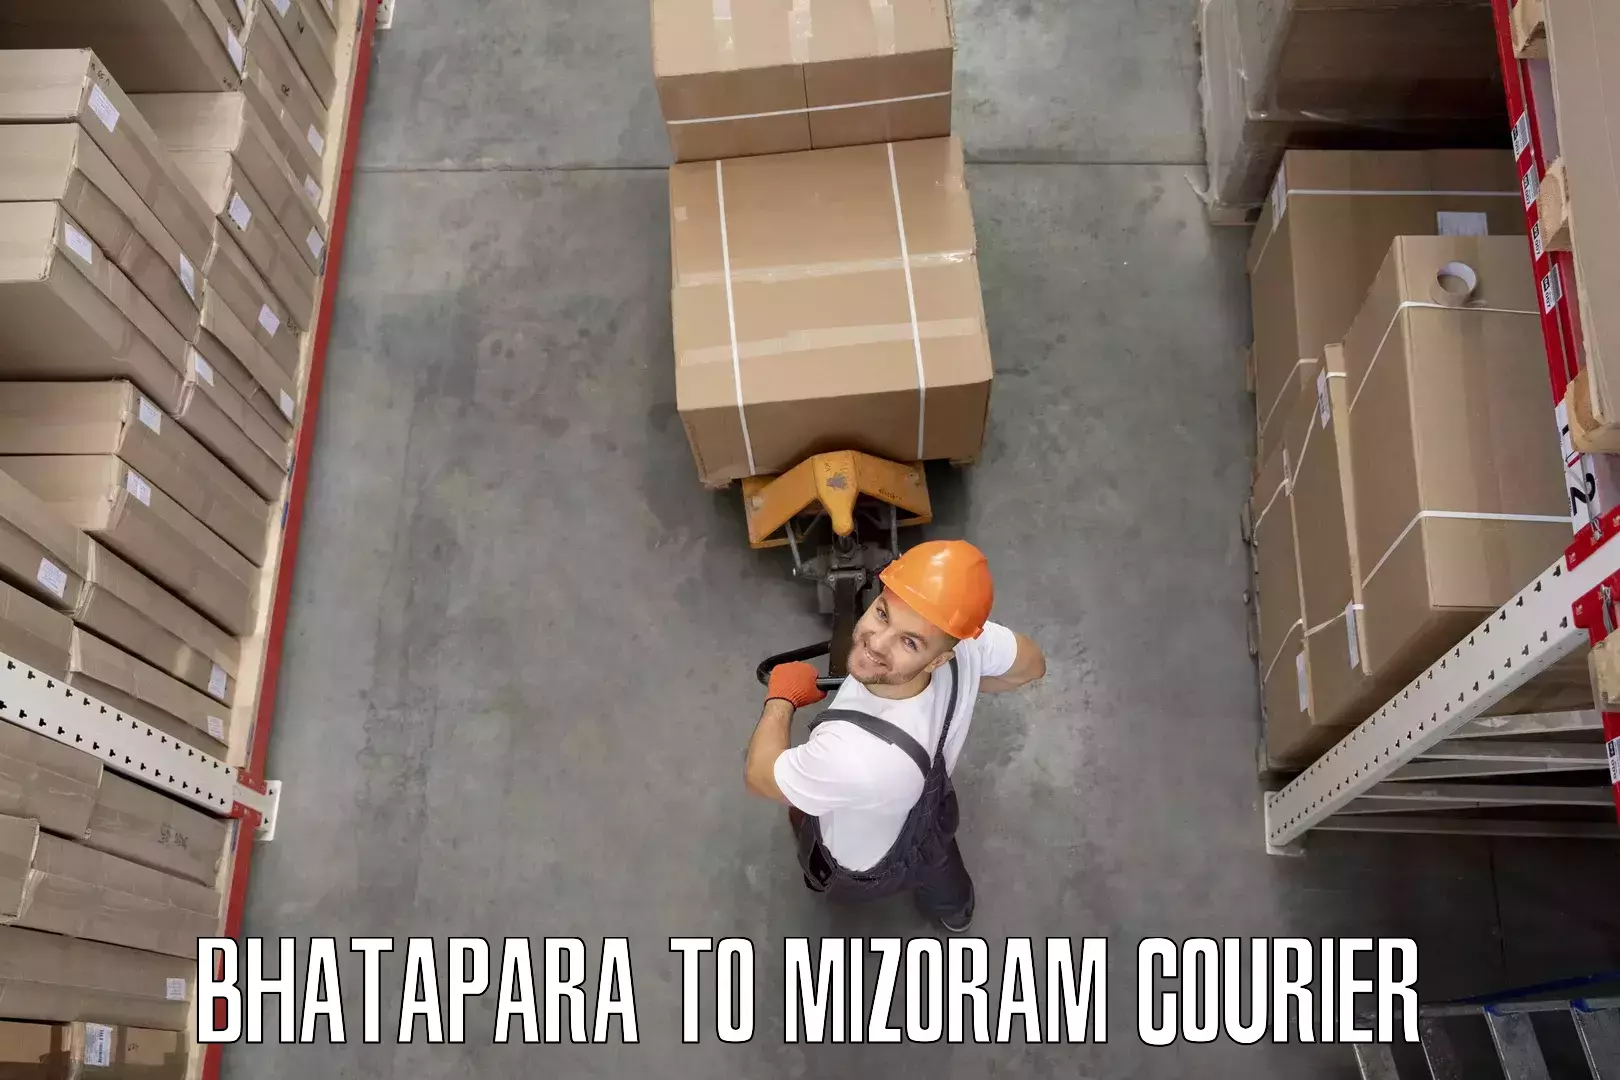 Furniture transport company Bhatapara to Aizawl